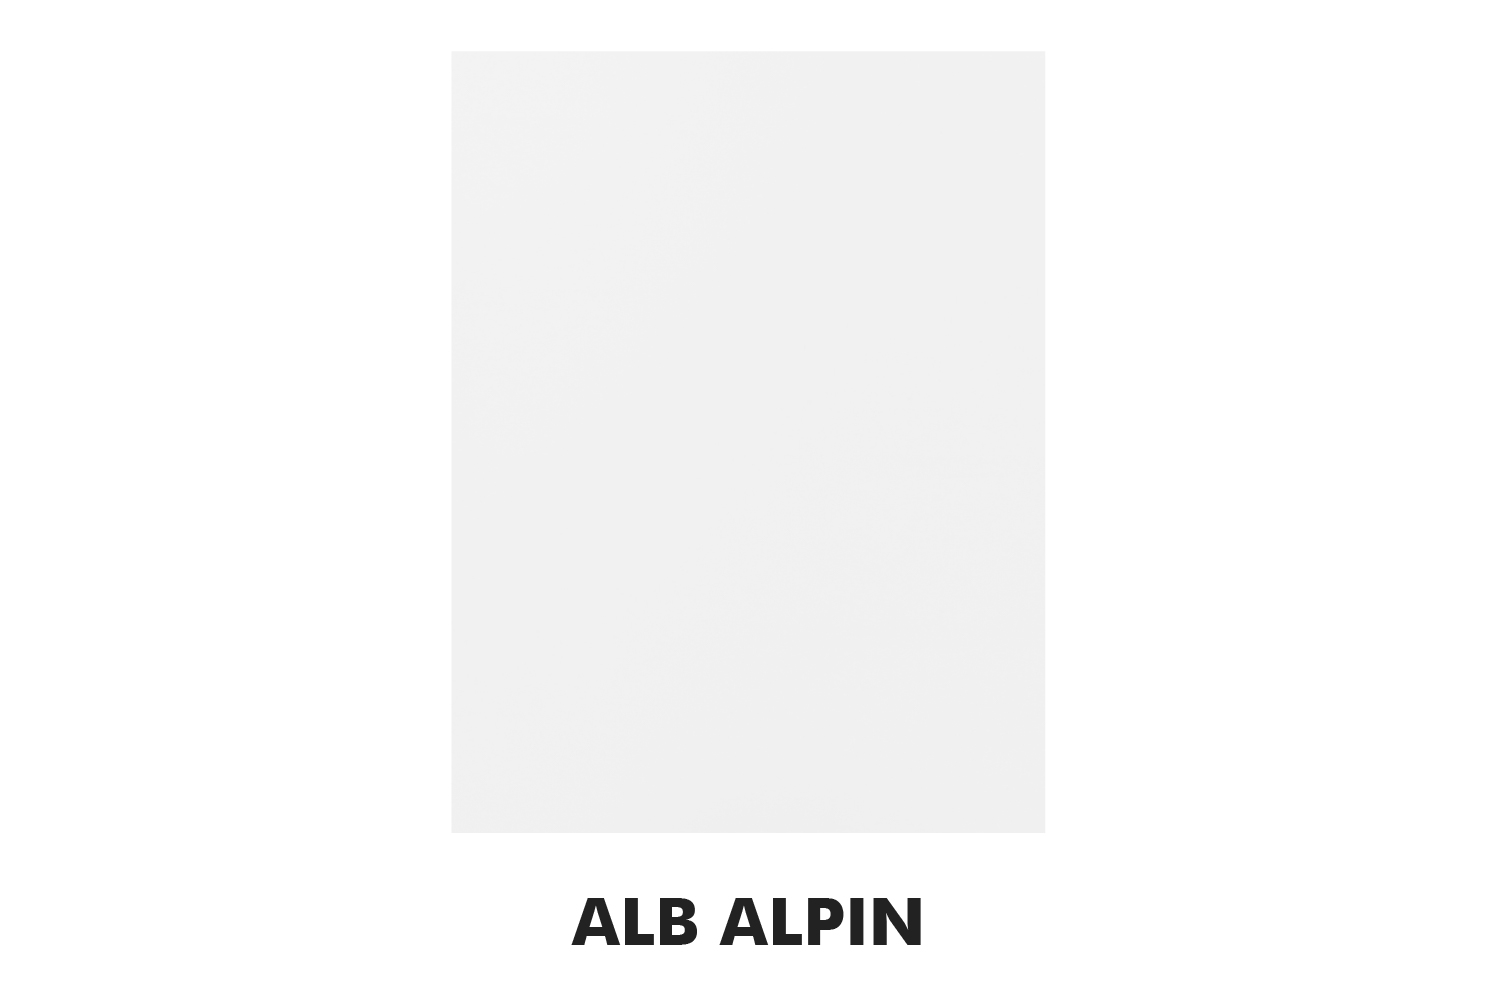 Alb Alpin